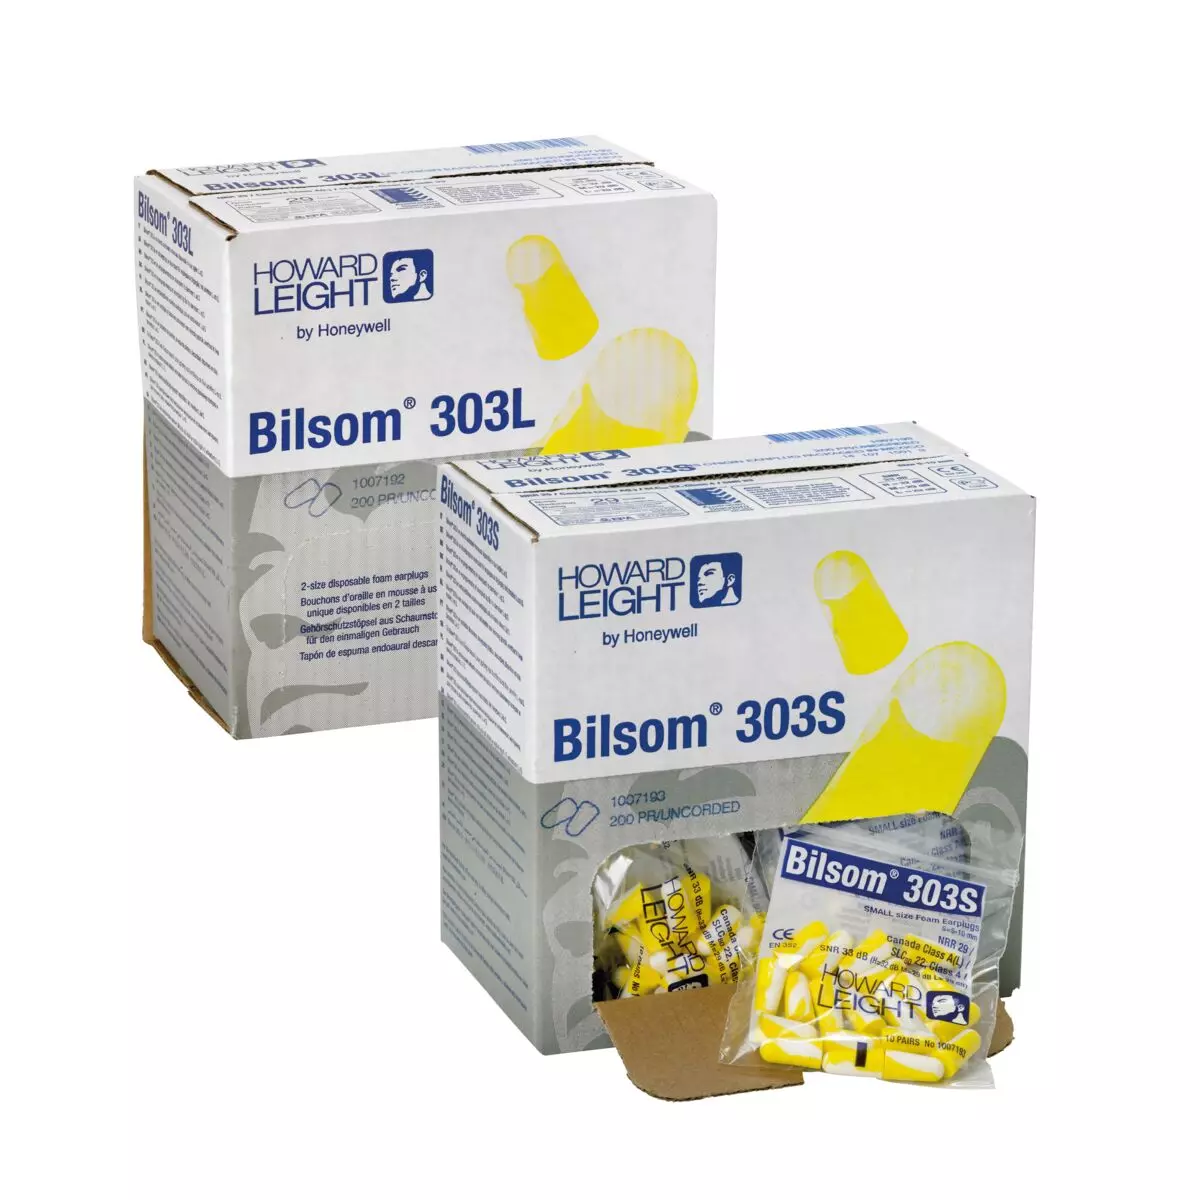 Pocket pack of Bilsom 303 earplugs in a distribution box - L